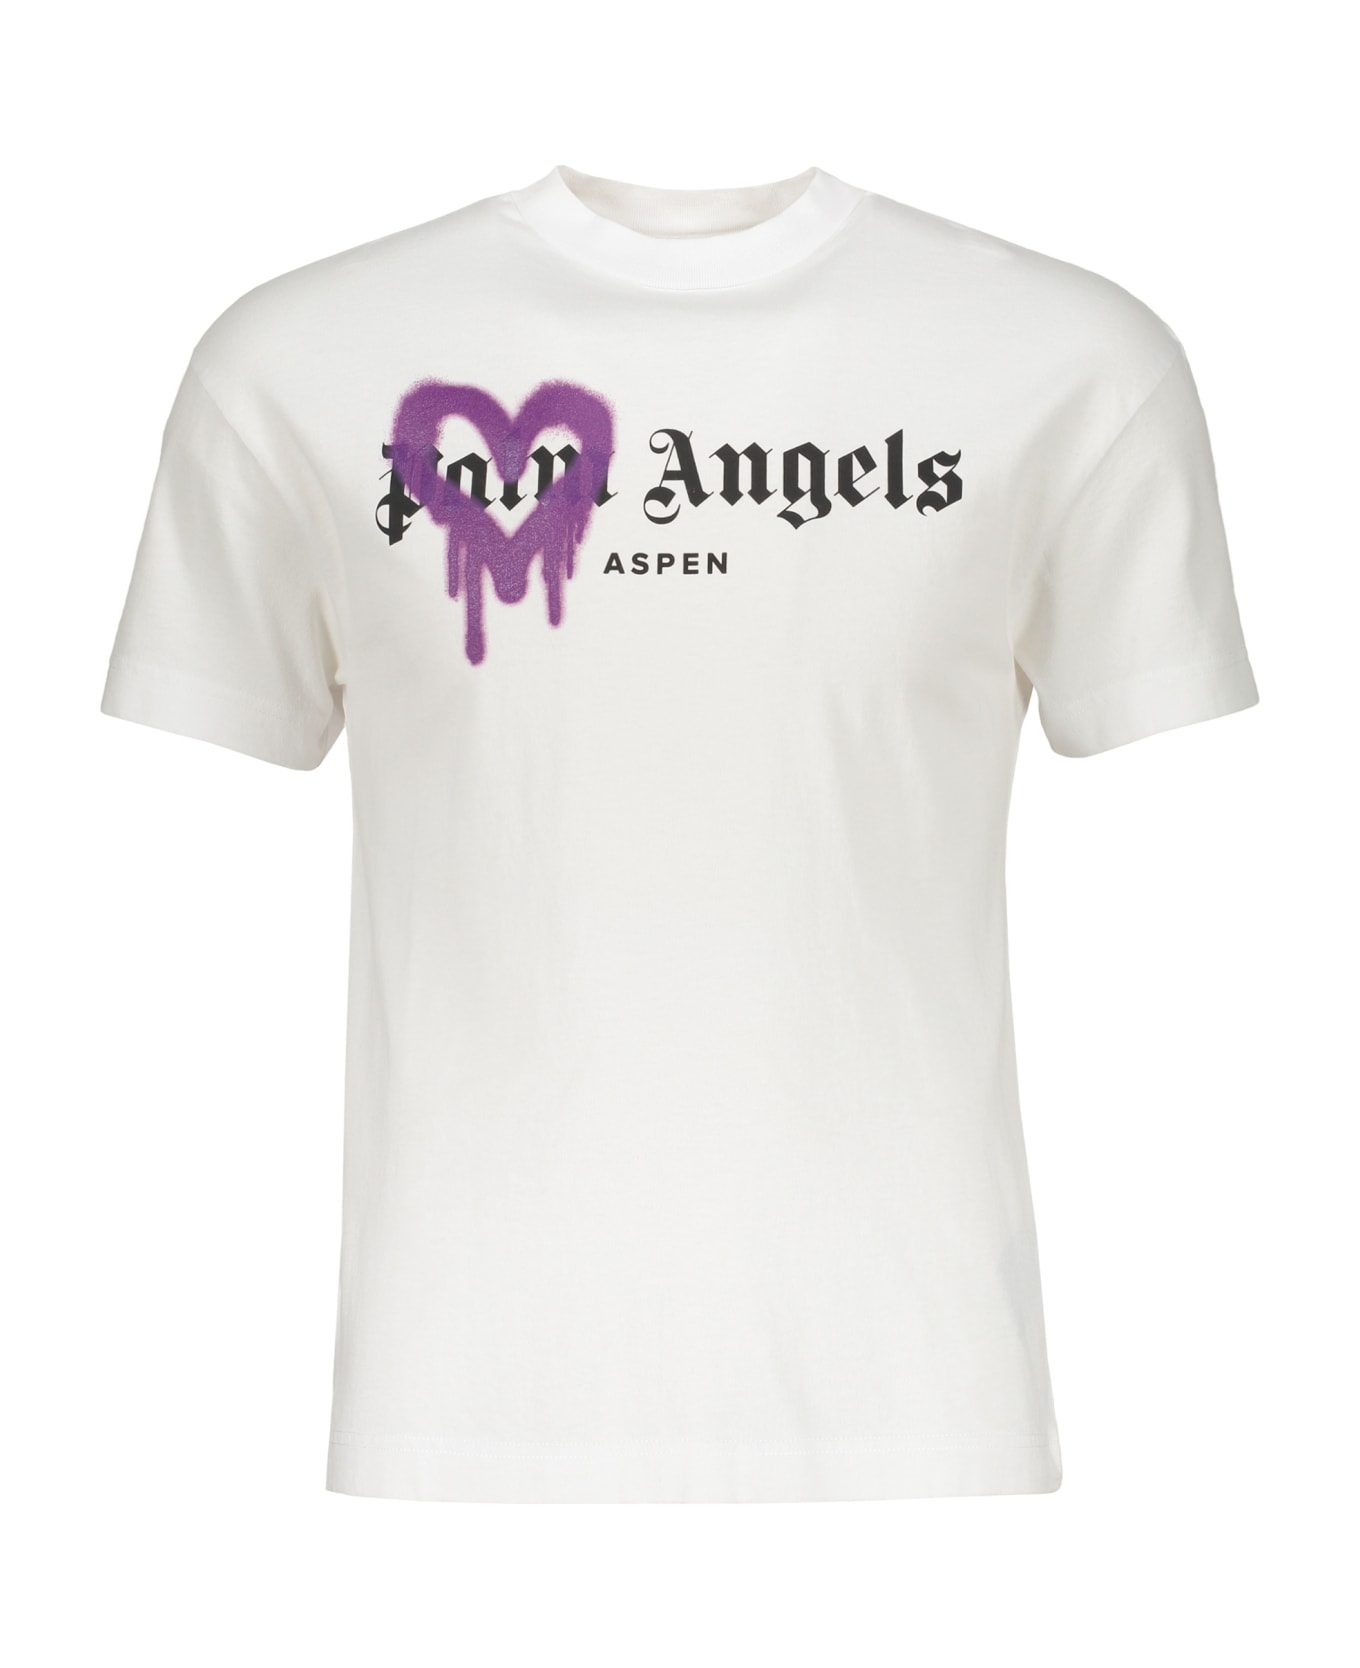 Palm Angels Cotton T-shirt - White